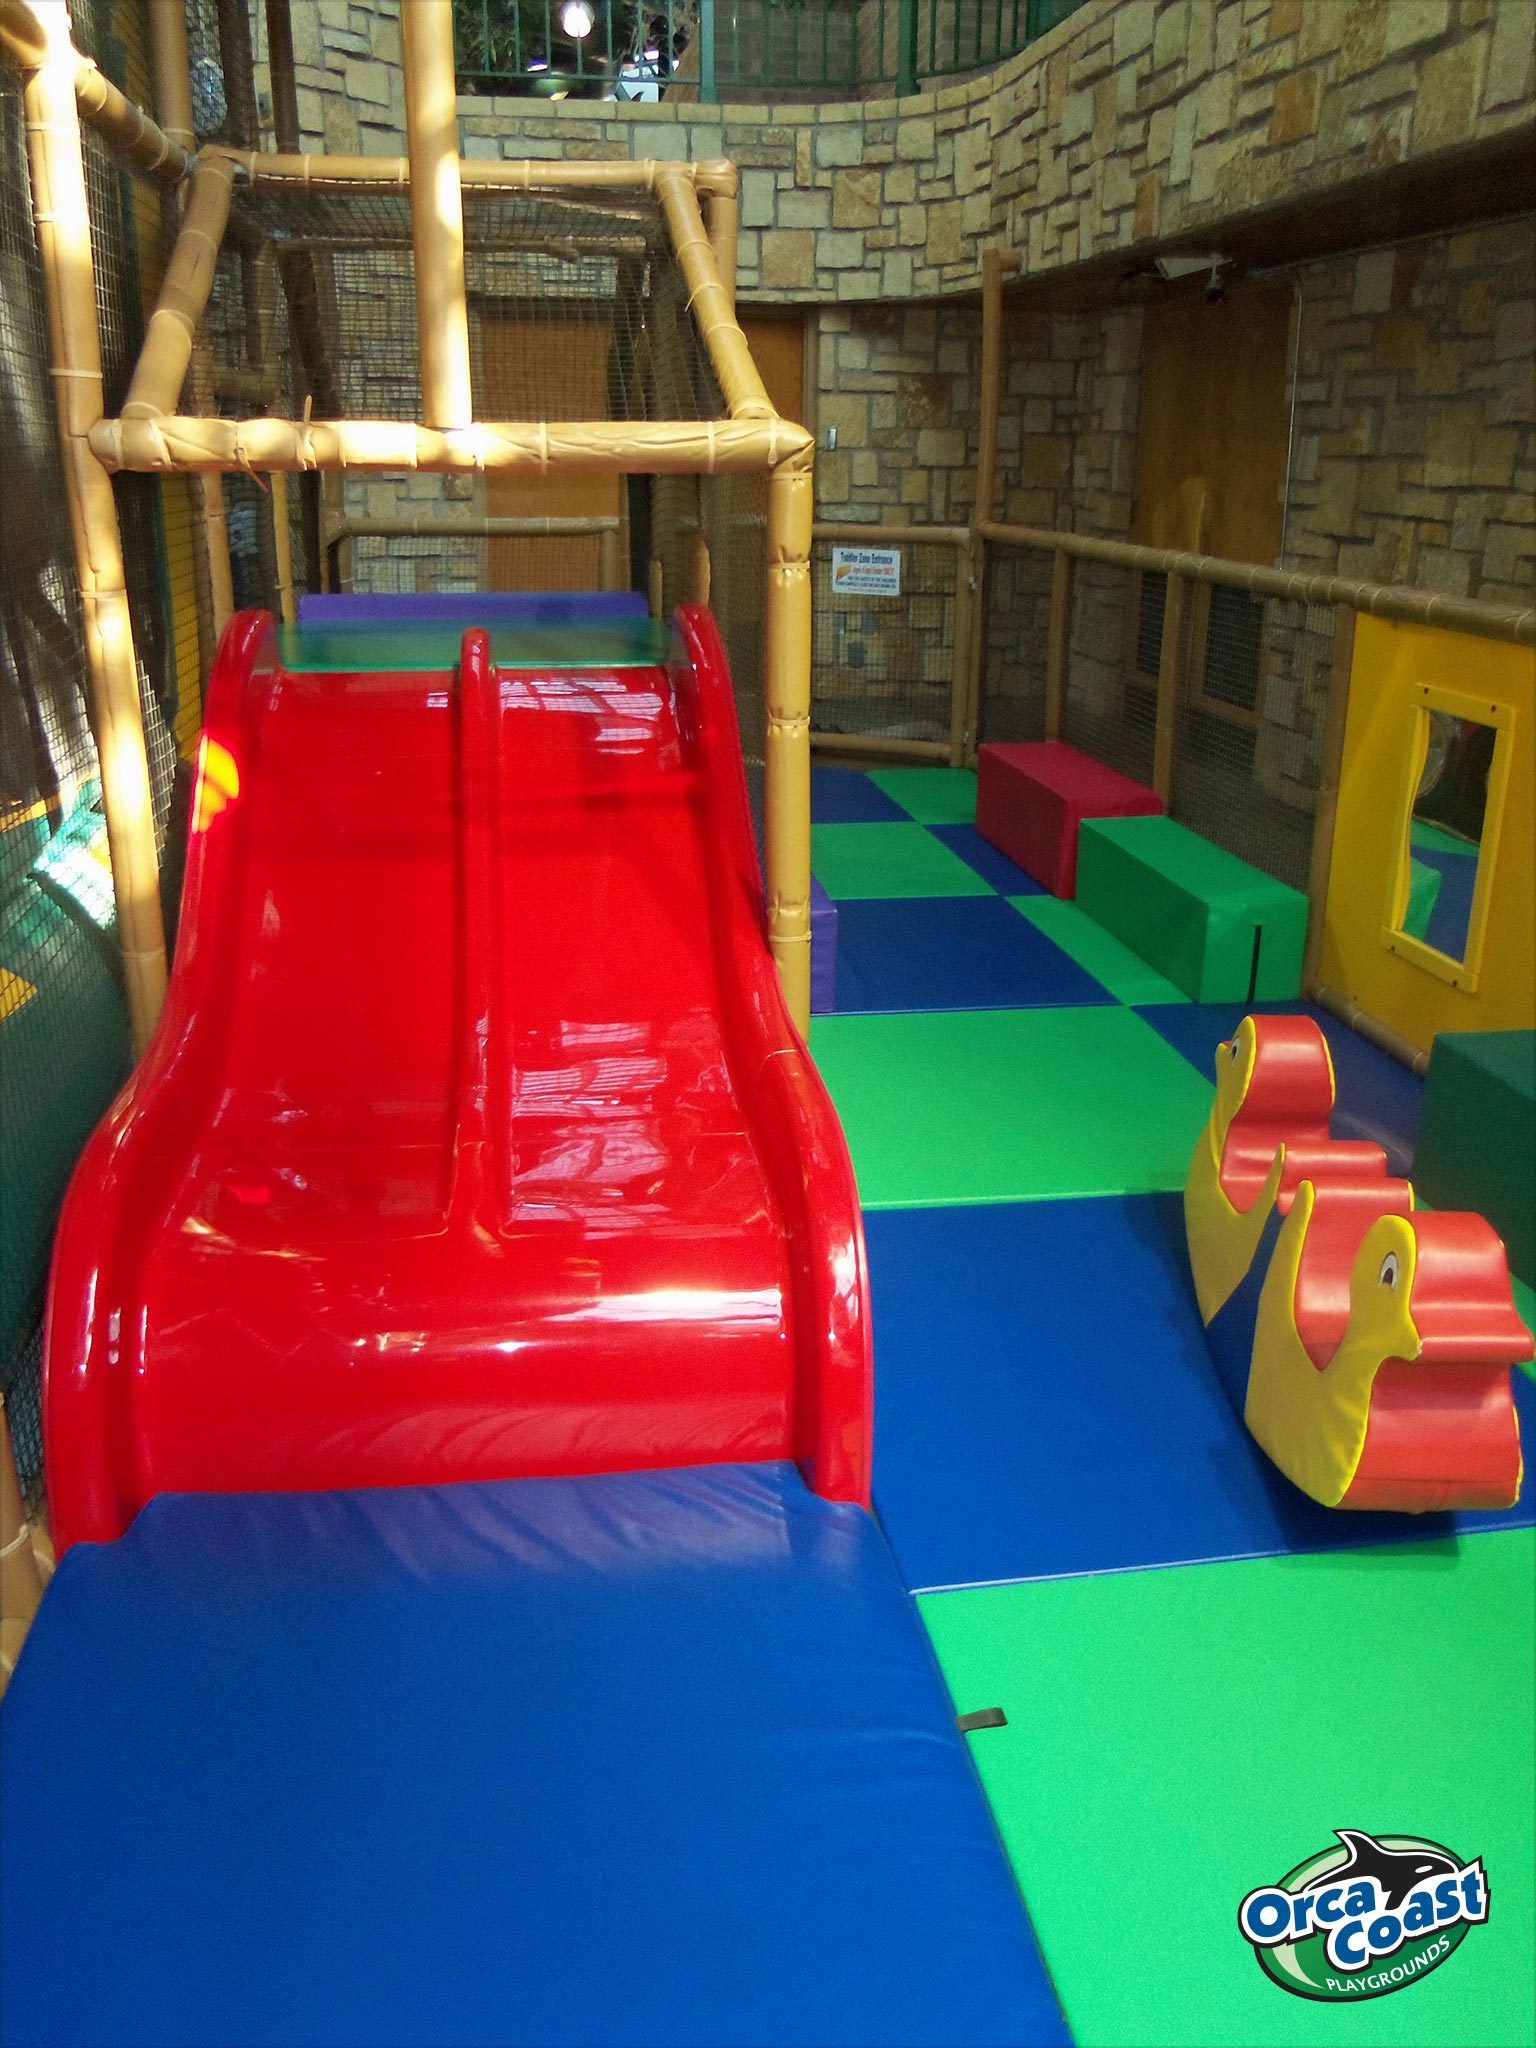 Edinborough Park Toddler Indoor Playground: Safe and Fun in Minneapolis, MN